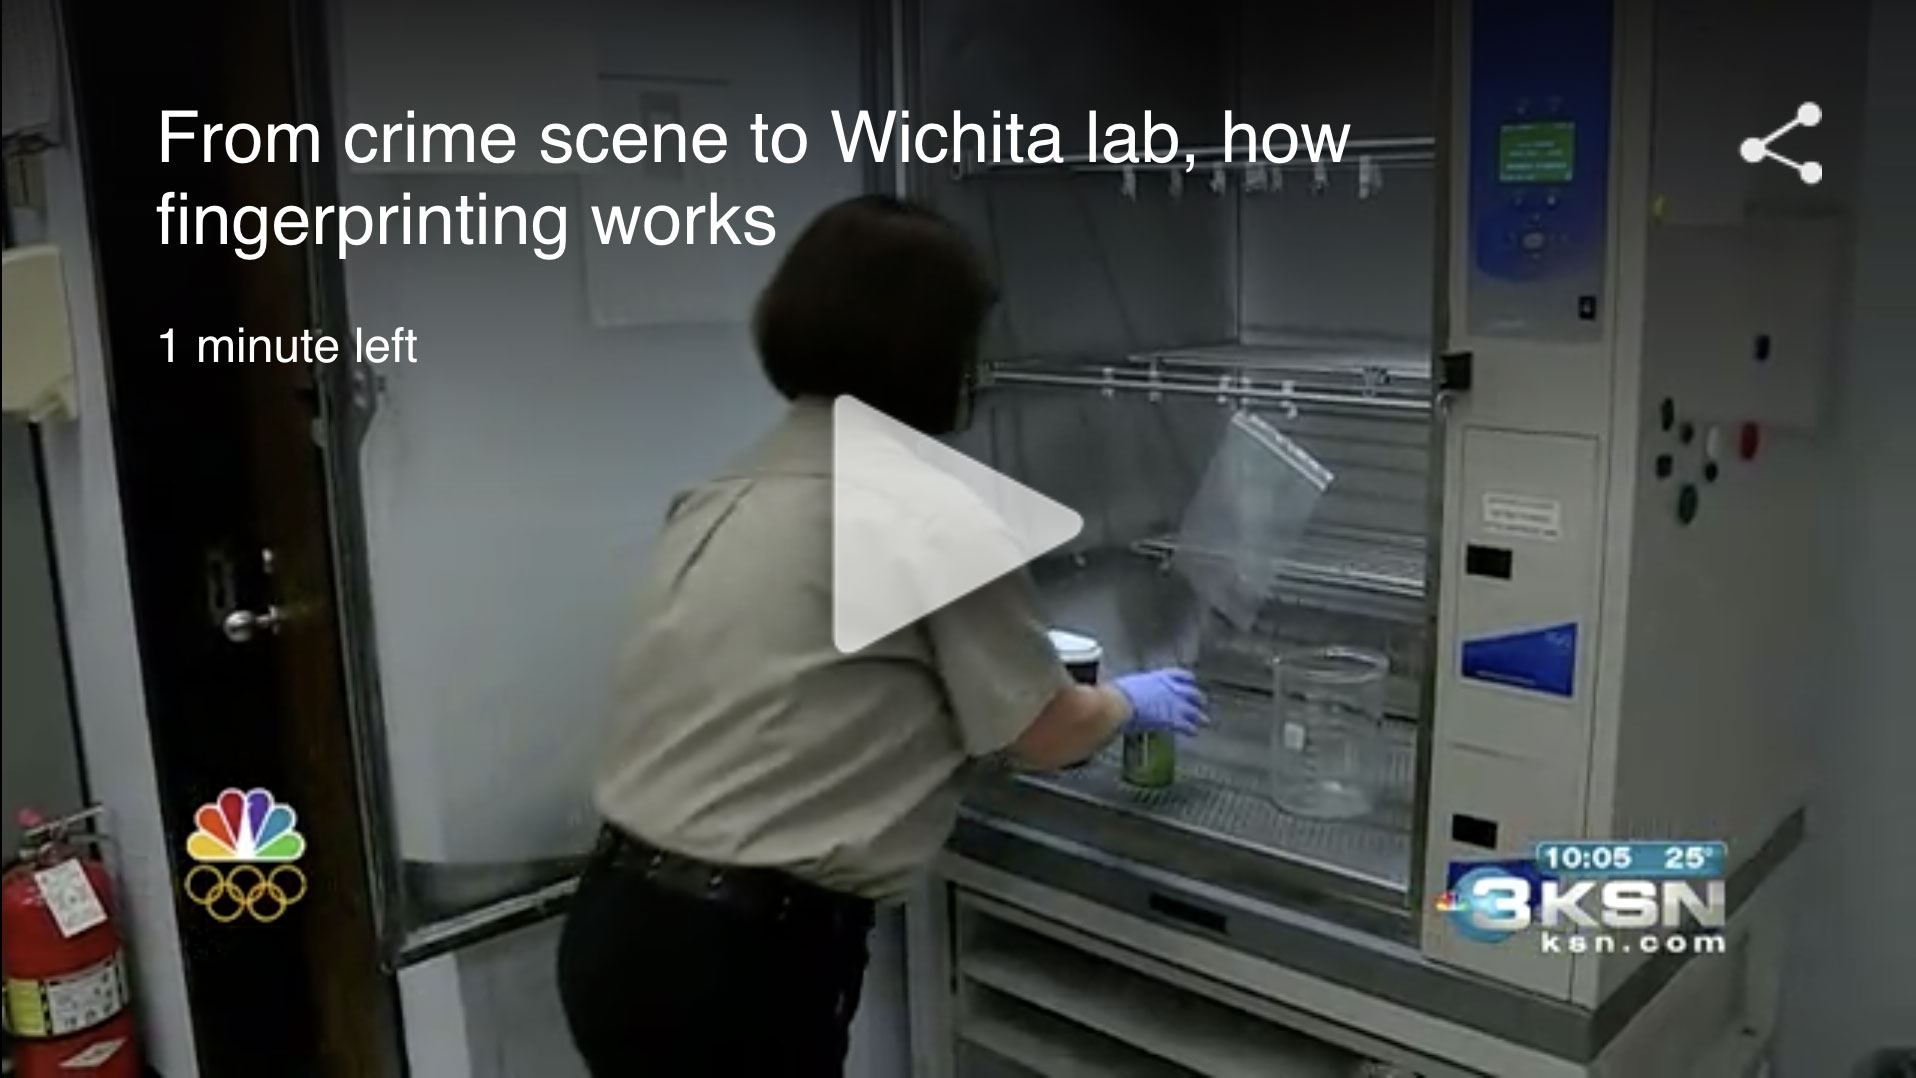 KSM news video of CApture BT latent fingerprint fuming chamber at Wichita crime lab